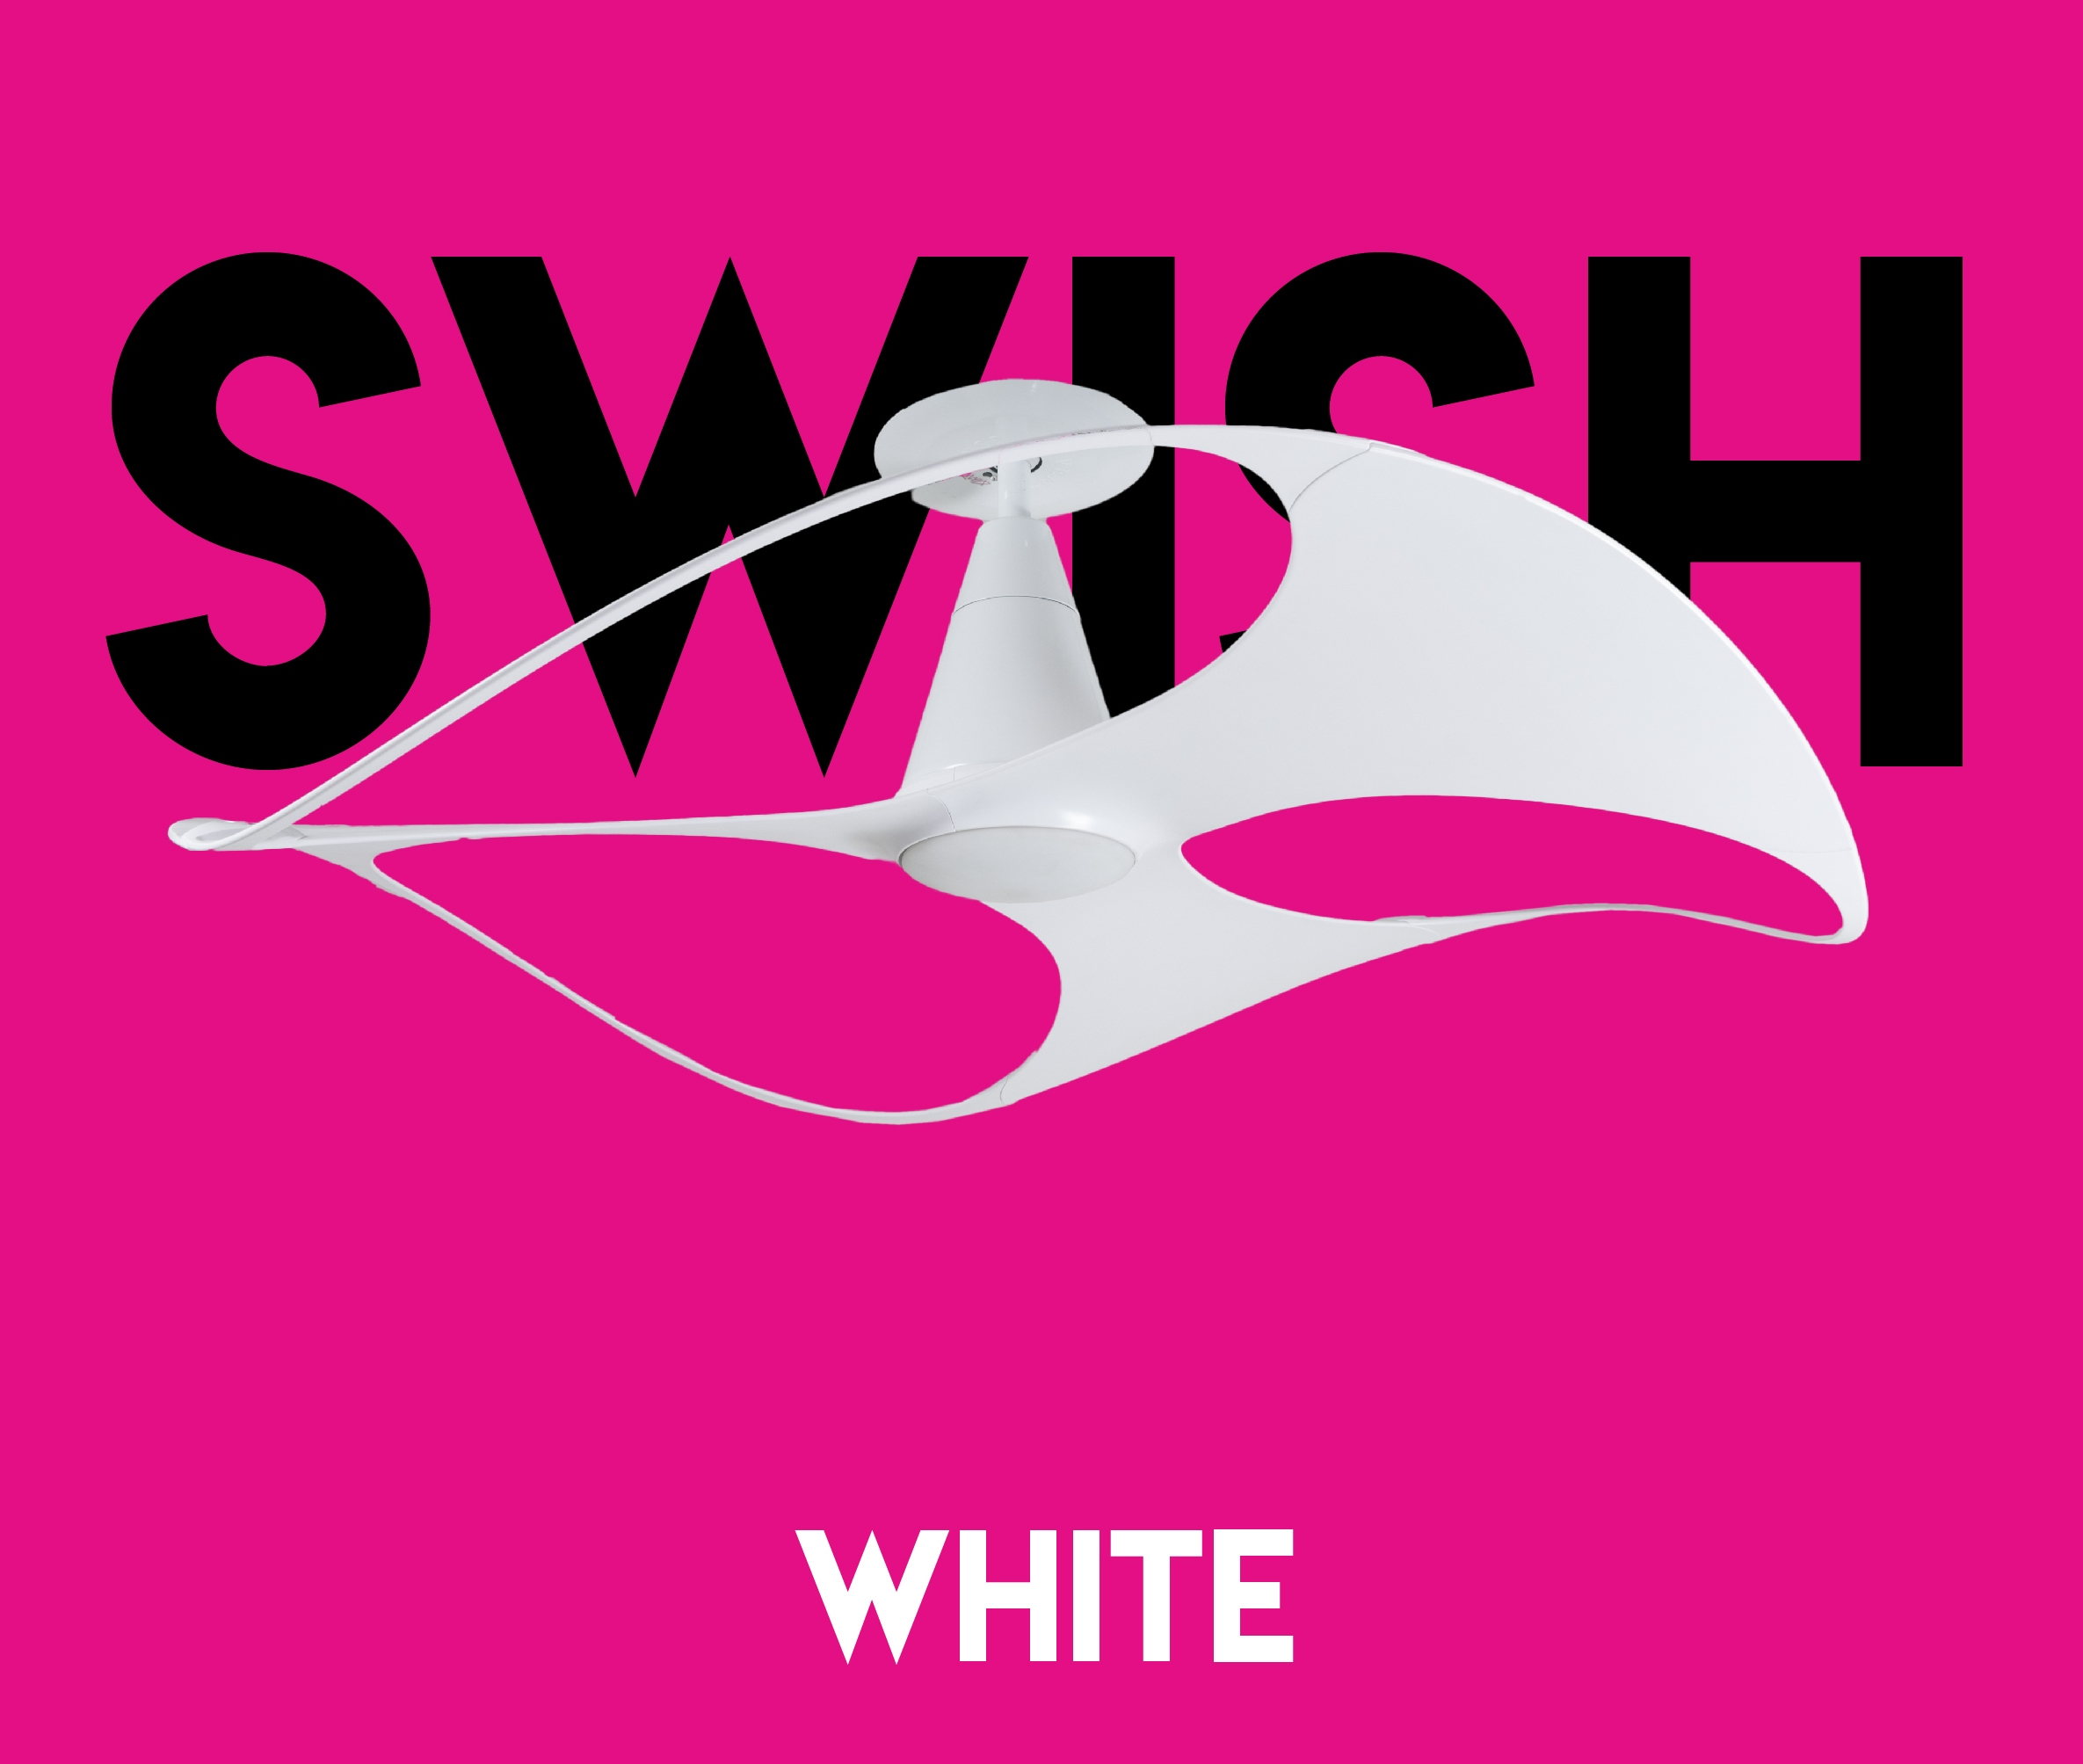 VENTO - SWISH LED 48-Inch DC Motor Ceiling Fan (White)